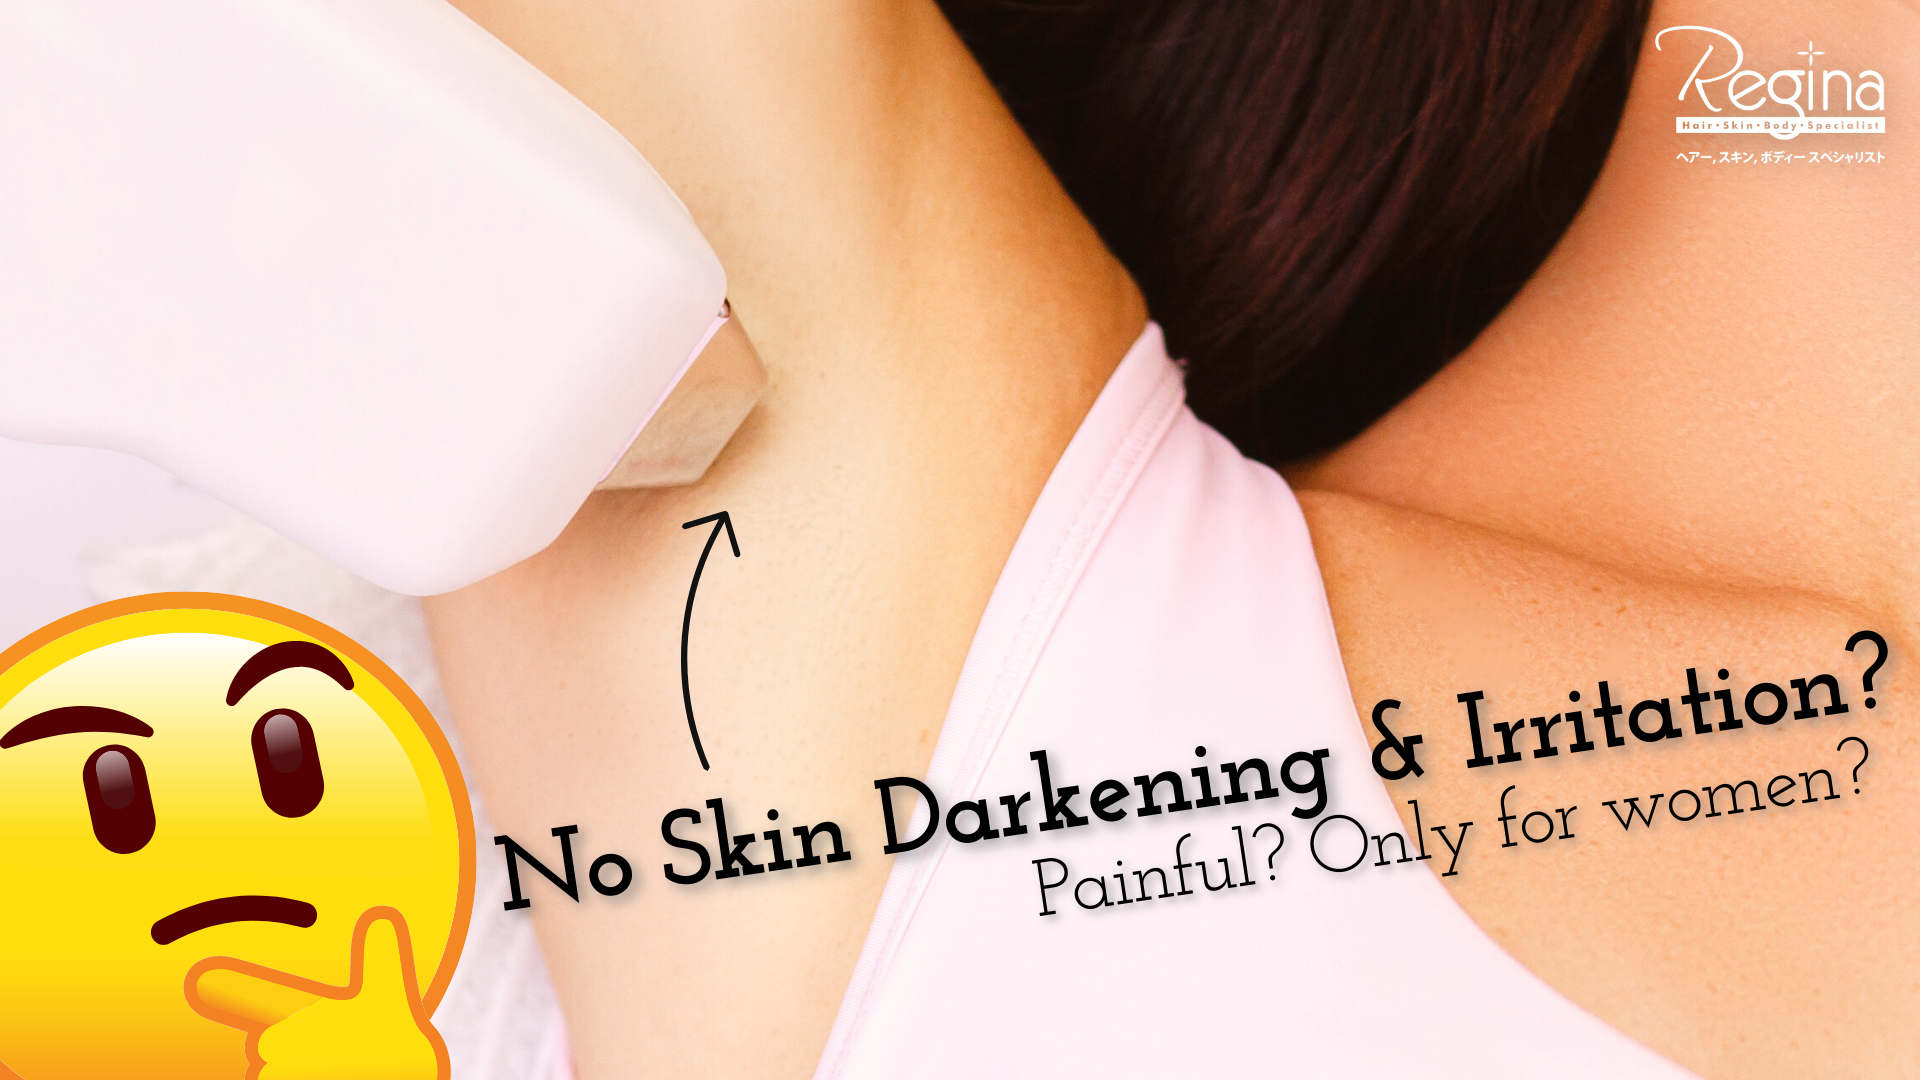 Laser Hair Removal - No Skin Darkening & Skin Irritation?